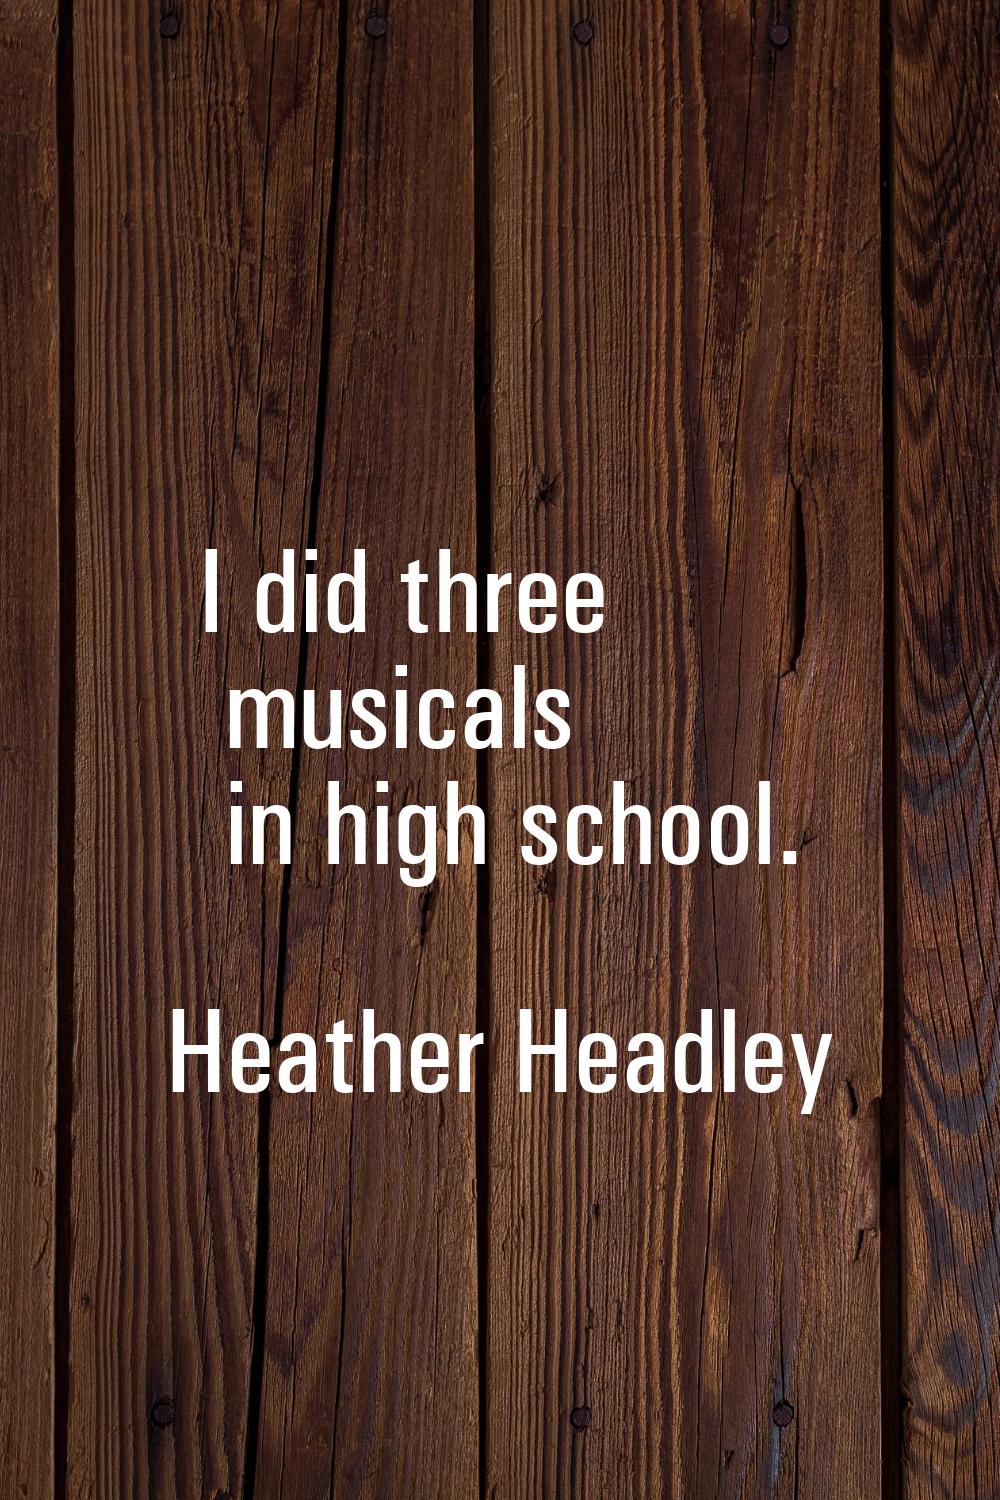 I did three musicals in high school.